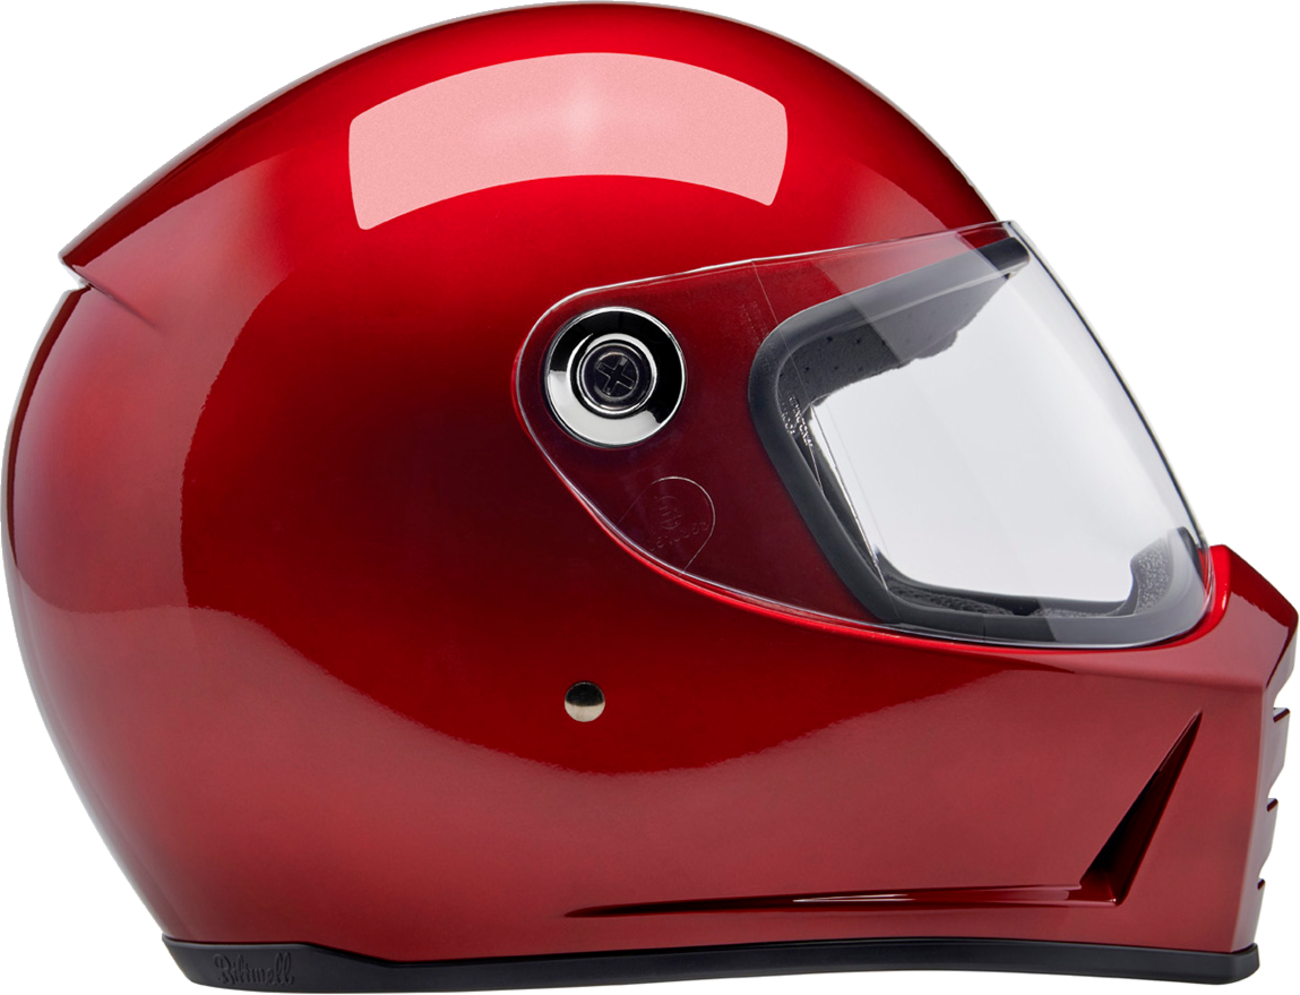 BILTWELL Lane Splitter Helmet - Metallic Cherry Red - Small 1004-351-502